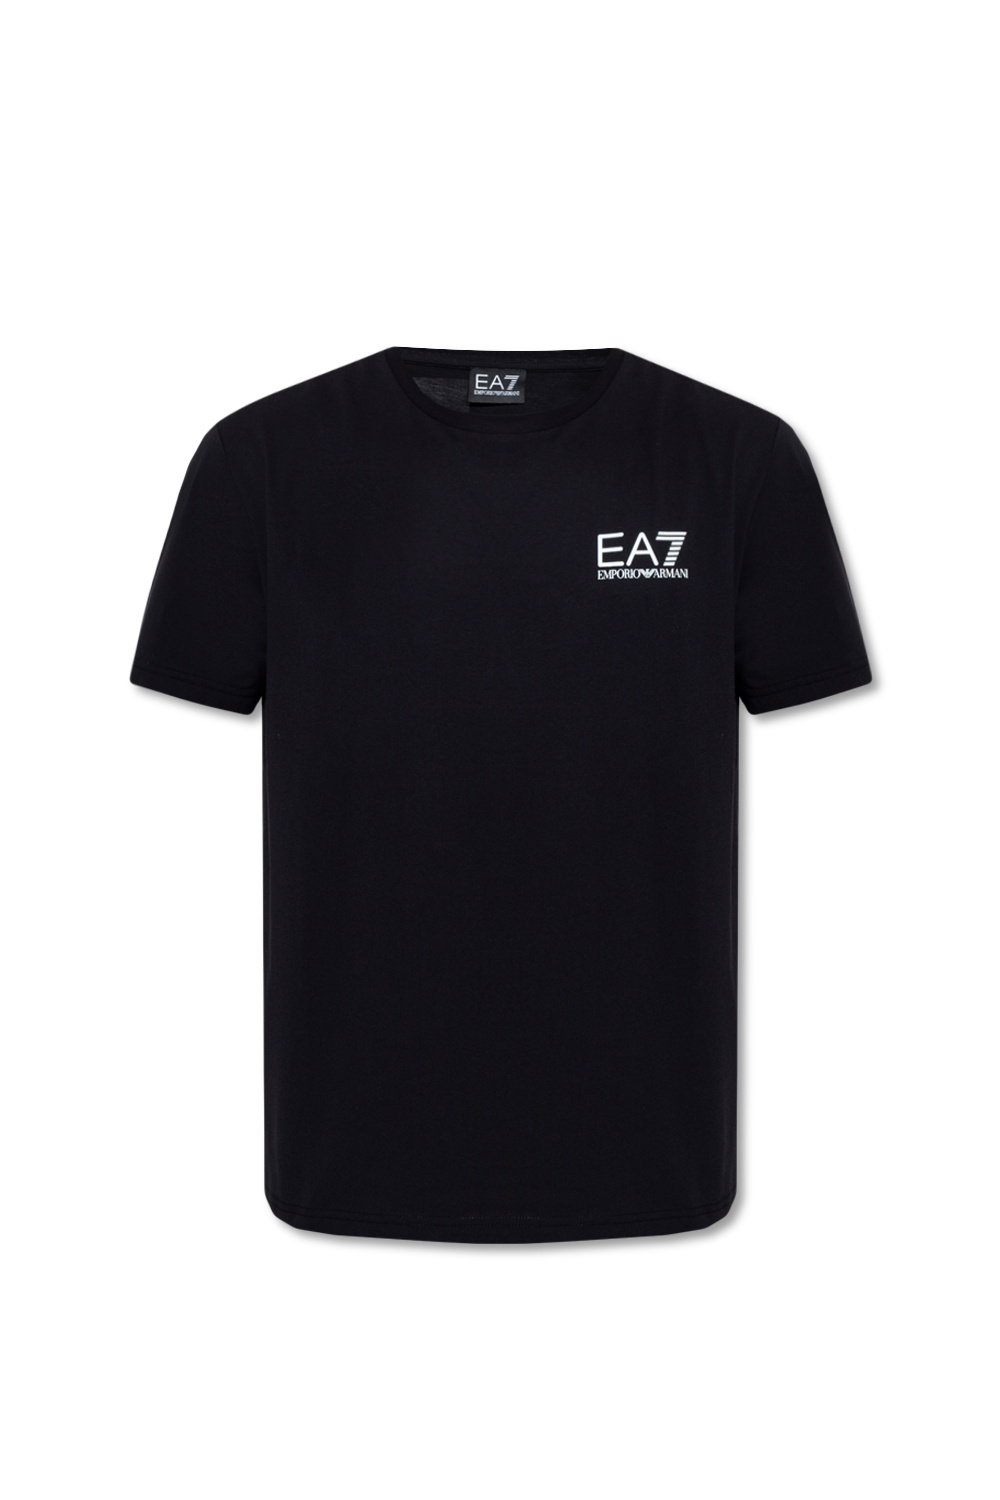 EA7 Emporio Armani Printed T-shirt